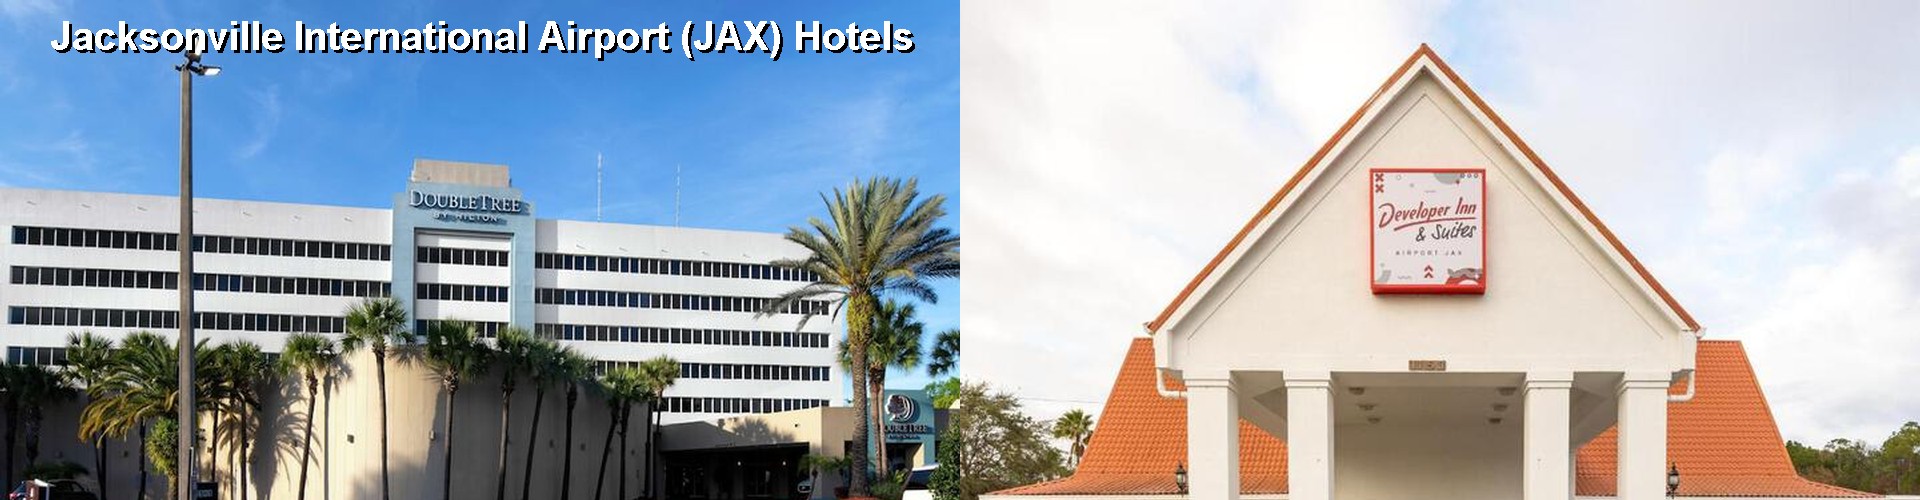 5 Best Hotels near Jacksonville International Airport (JAX)